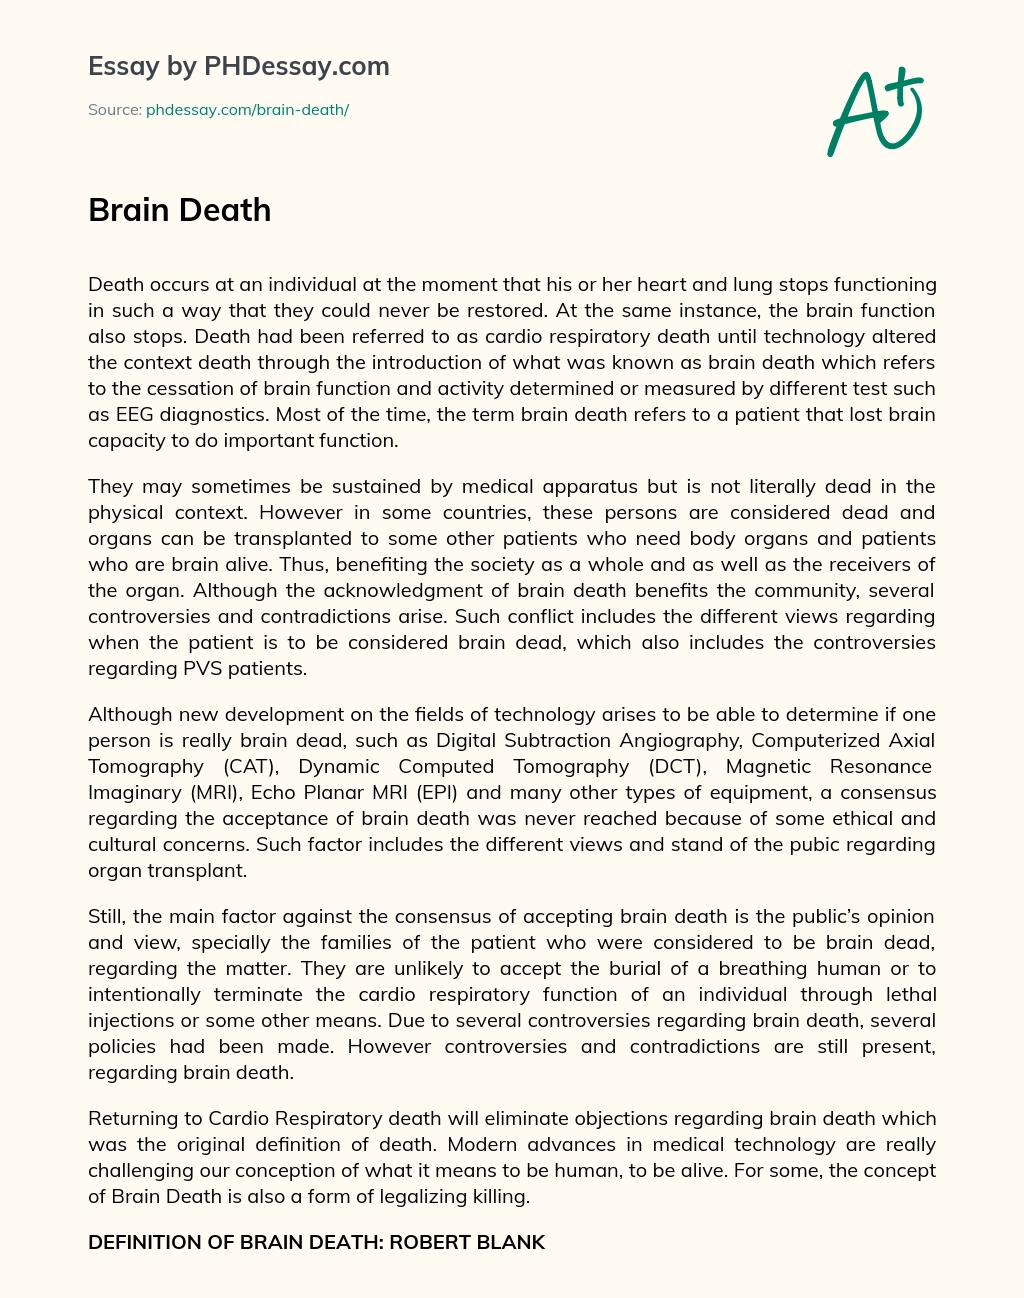 Brain Death and Organ Transplantation: Controversies and Benefits essay